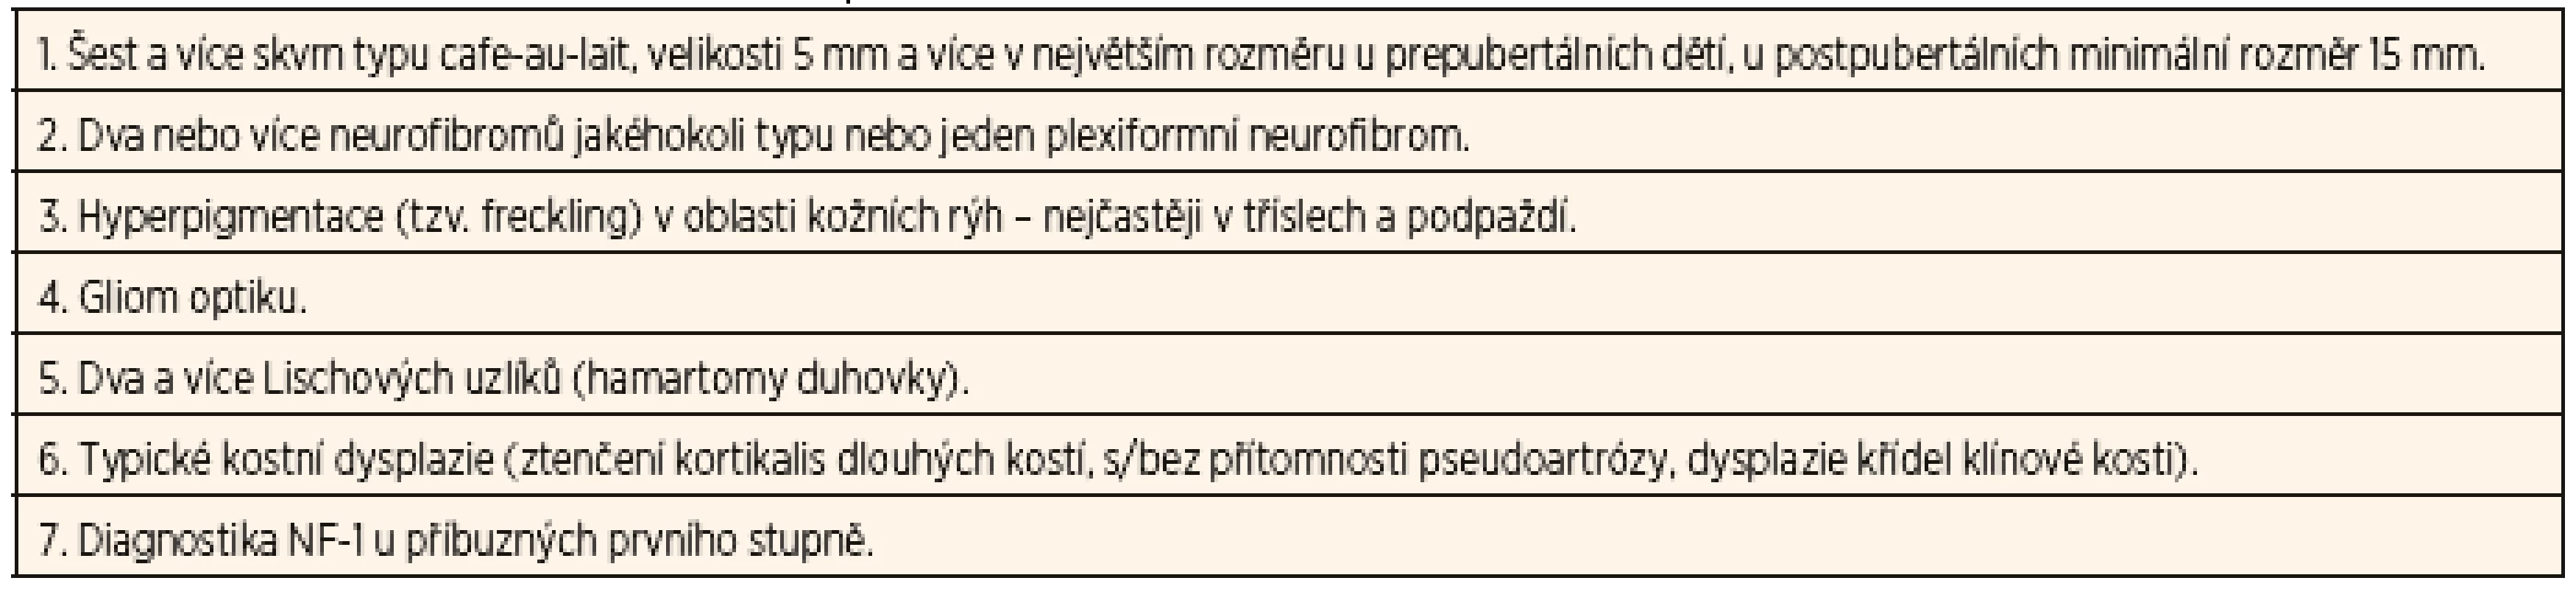 Diagnostická kritéria neurofibromatózy.